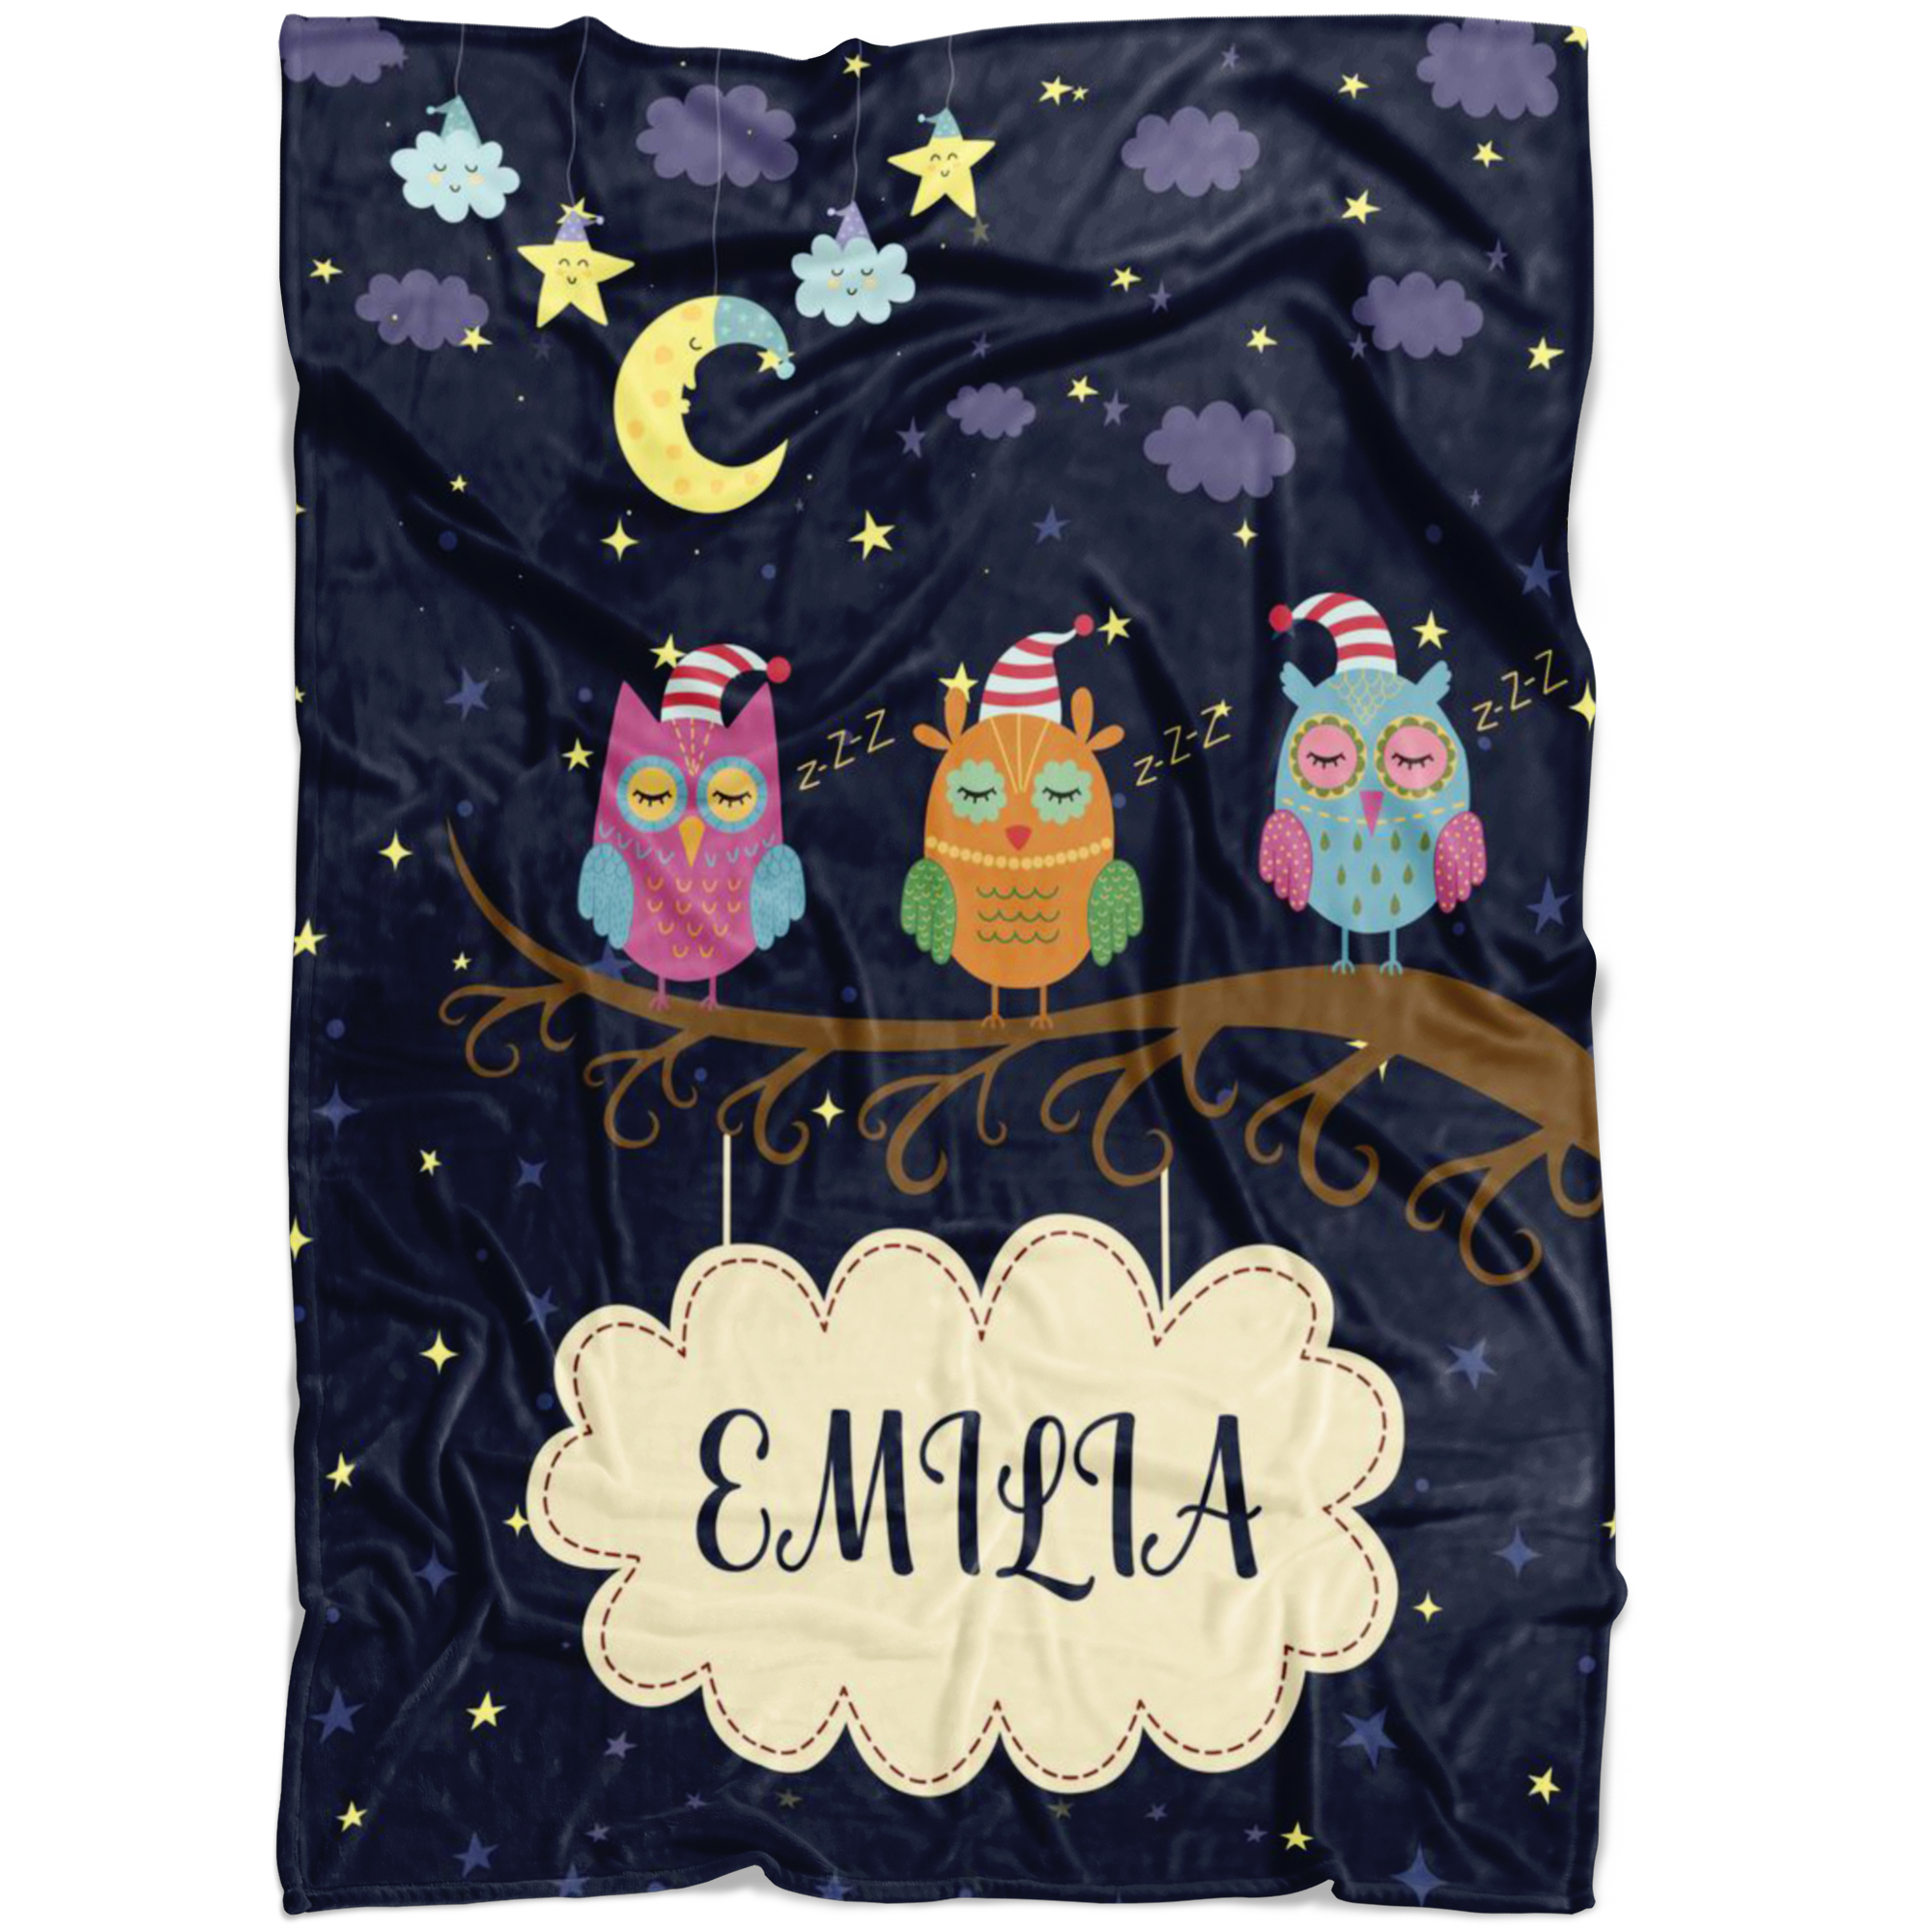 Personalized Name Sleepy Owls Blanket for Kids - Emilia